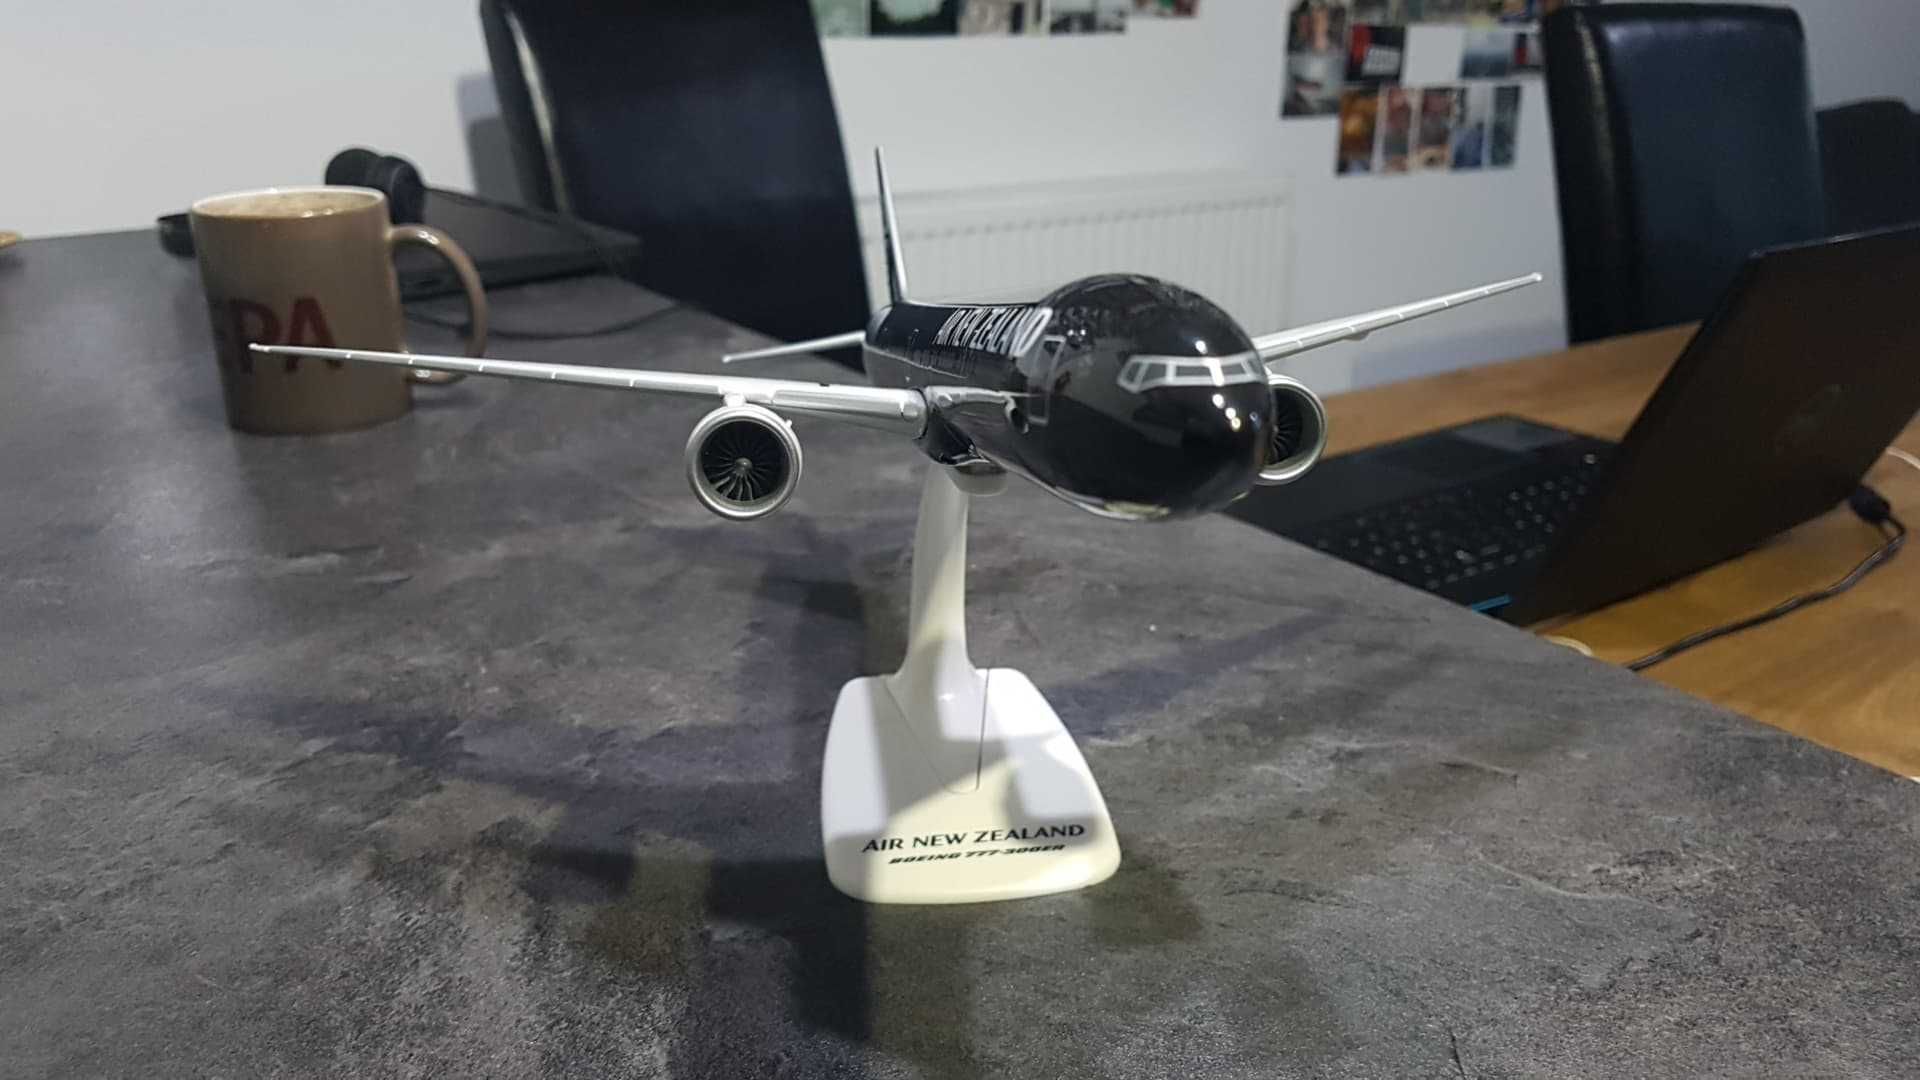 Macheta avion Air New Zealand | Decoratie | Perfect pt cadou